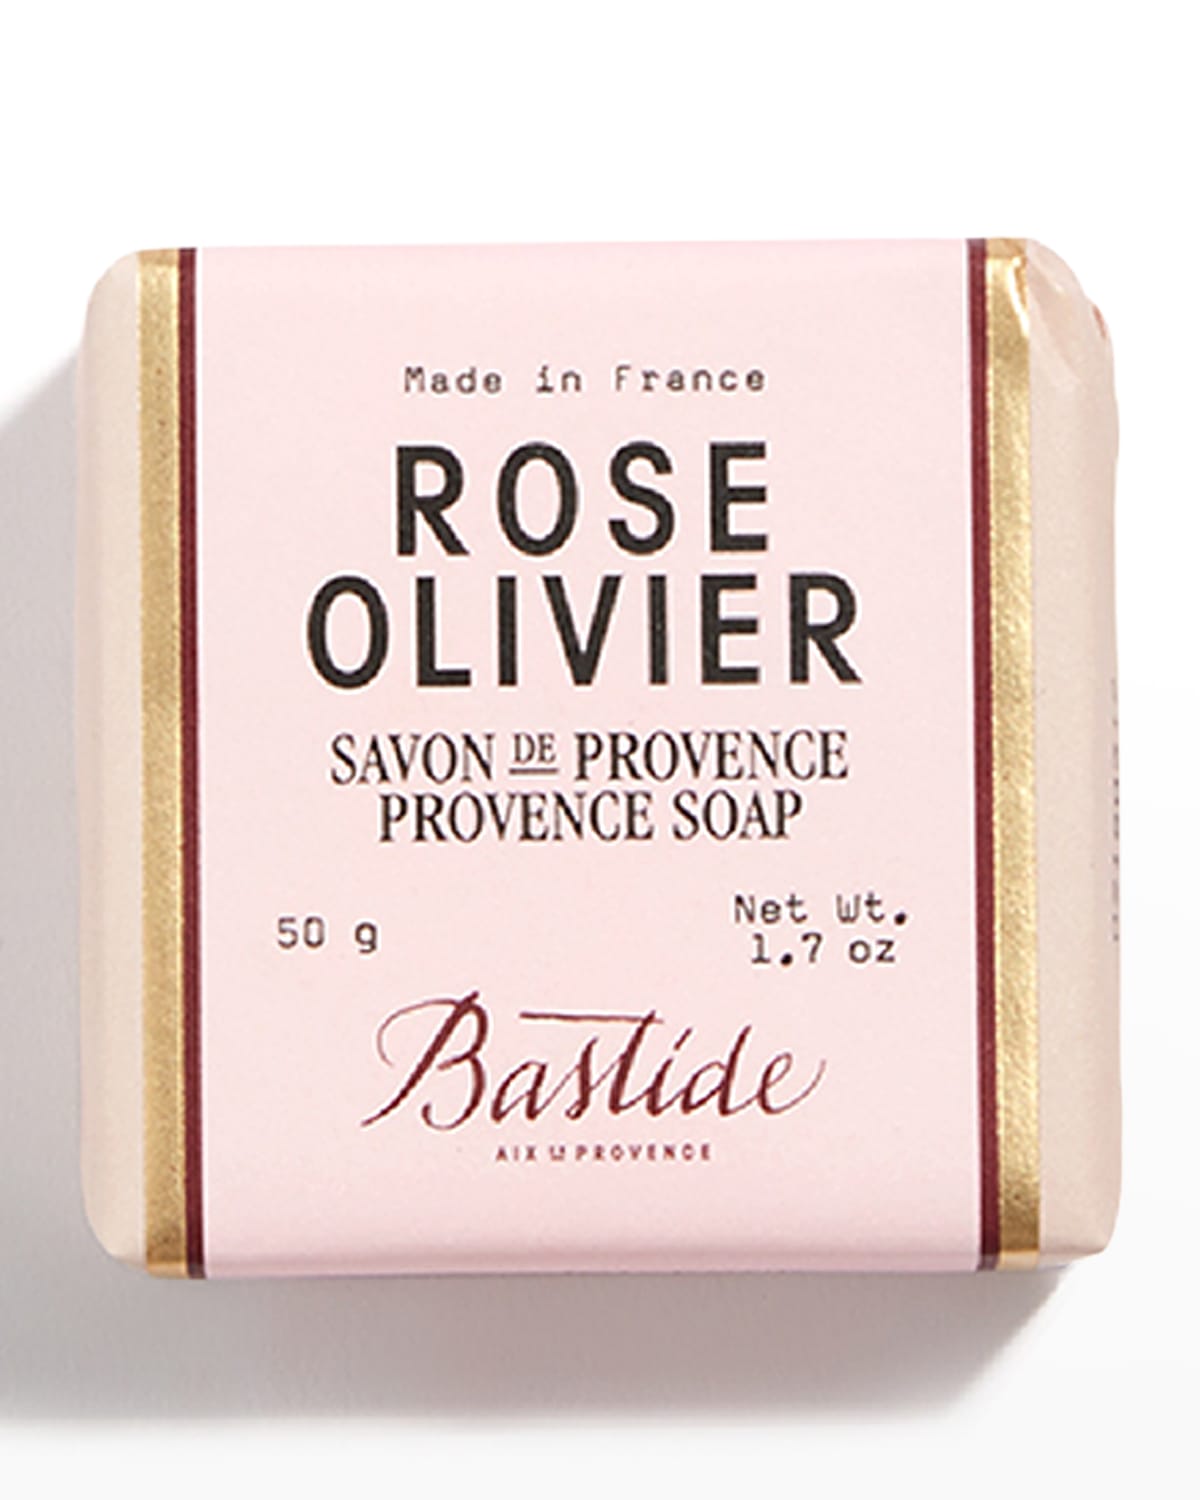 Bastide 1.7 oz. Rose Olivier Artisanal Provence Soap